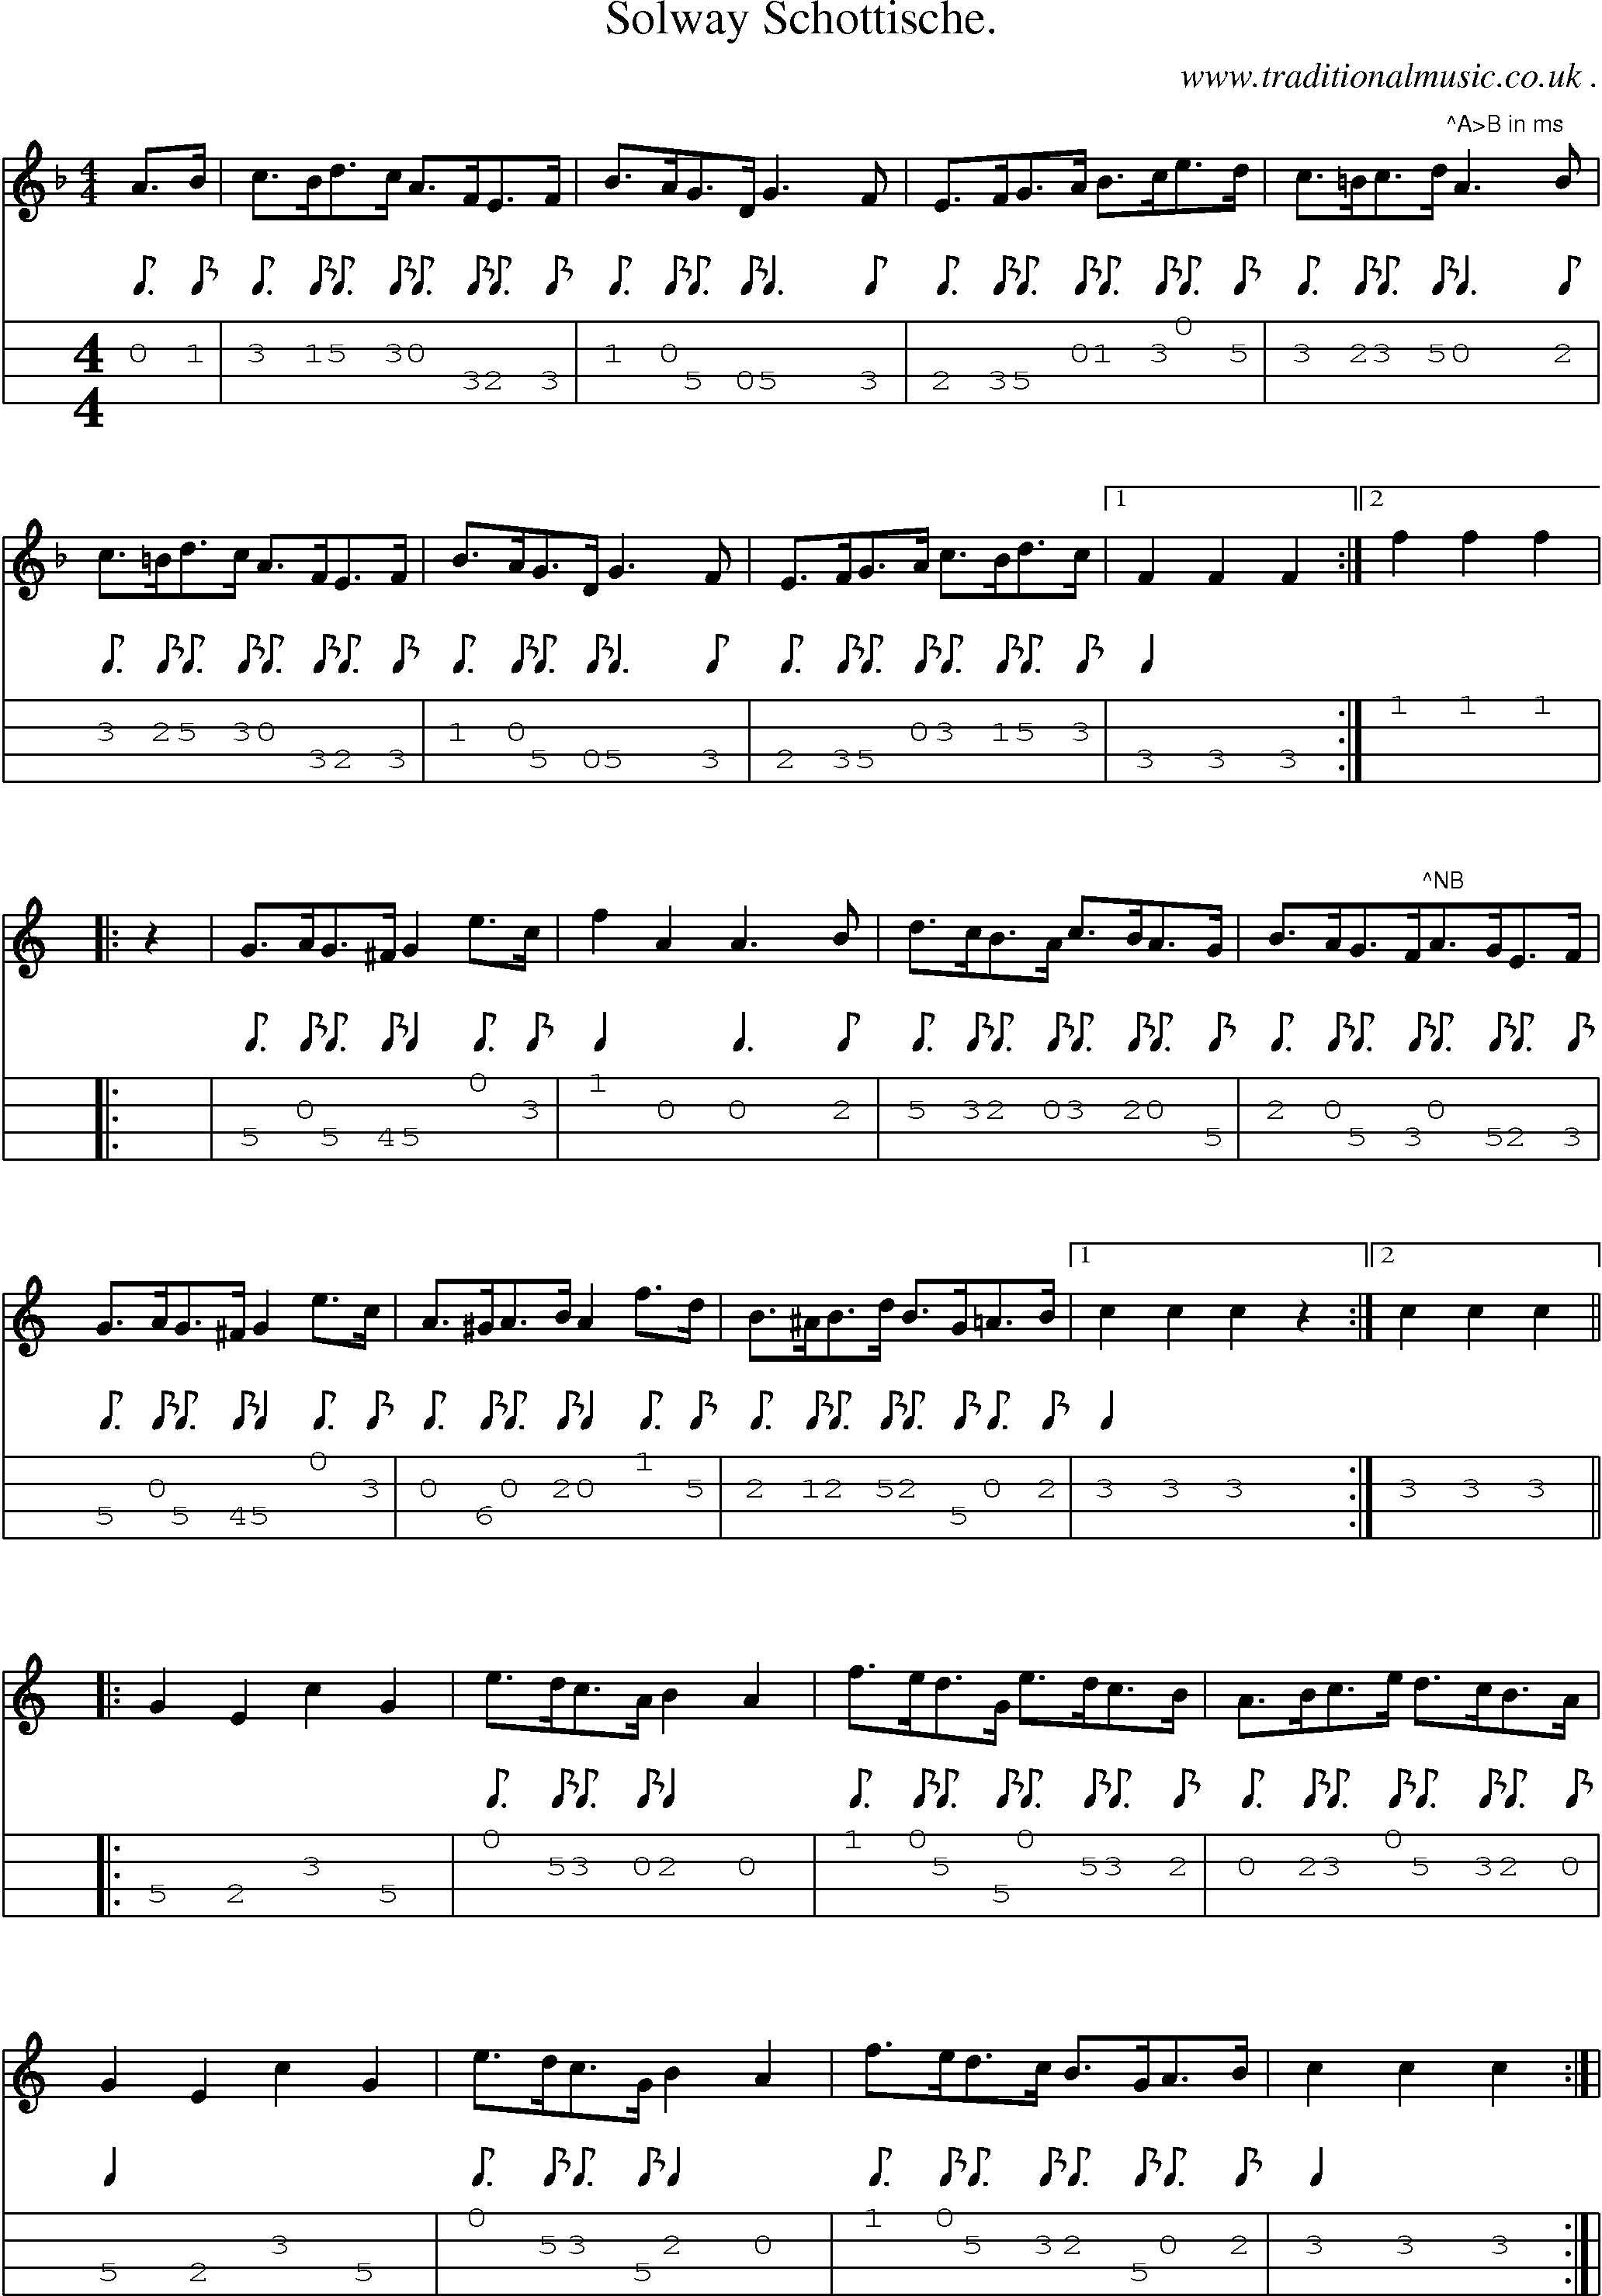 Sheet-Music and Mandolin Tabs for Solway Schottische